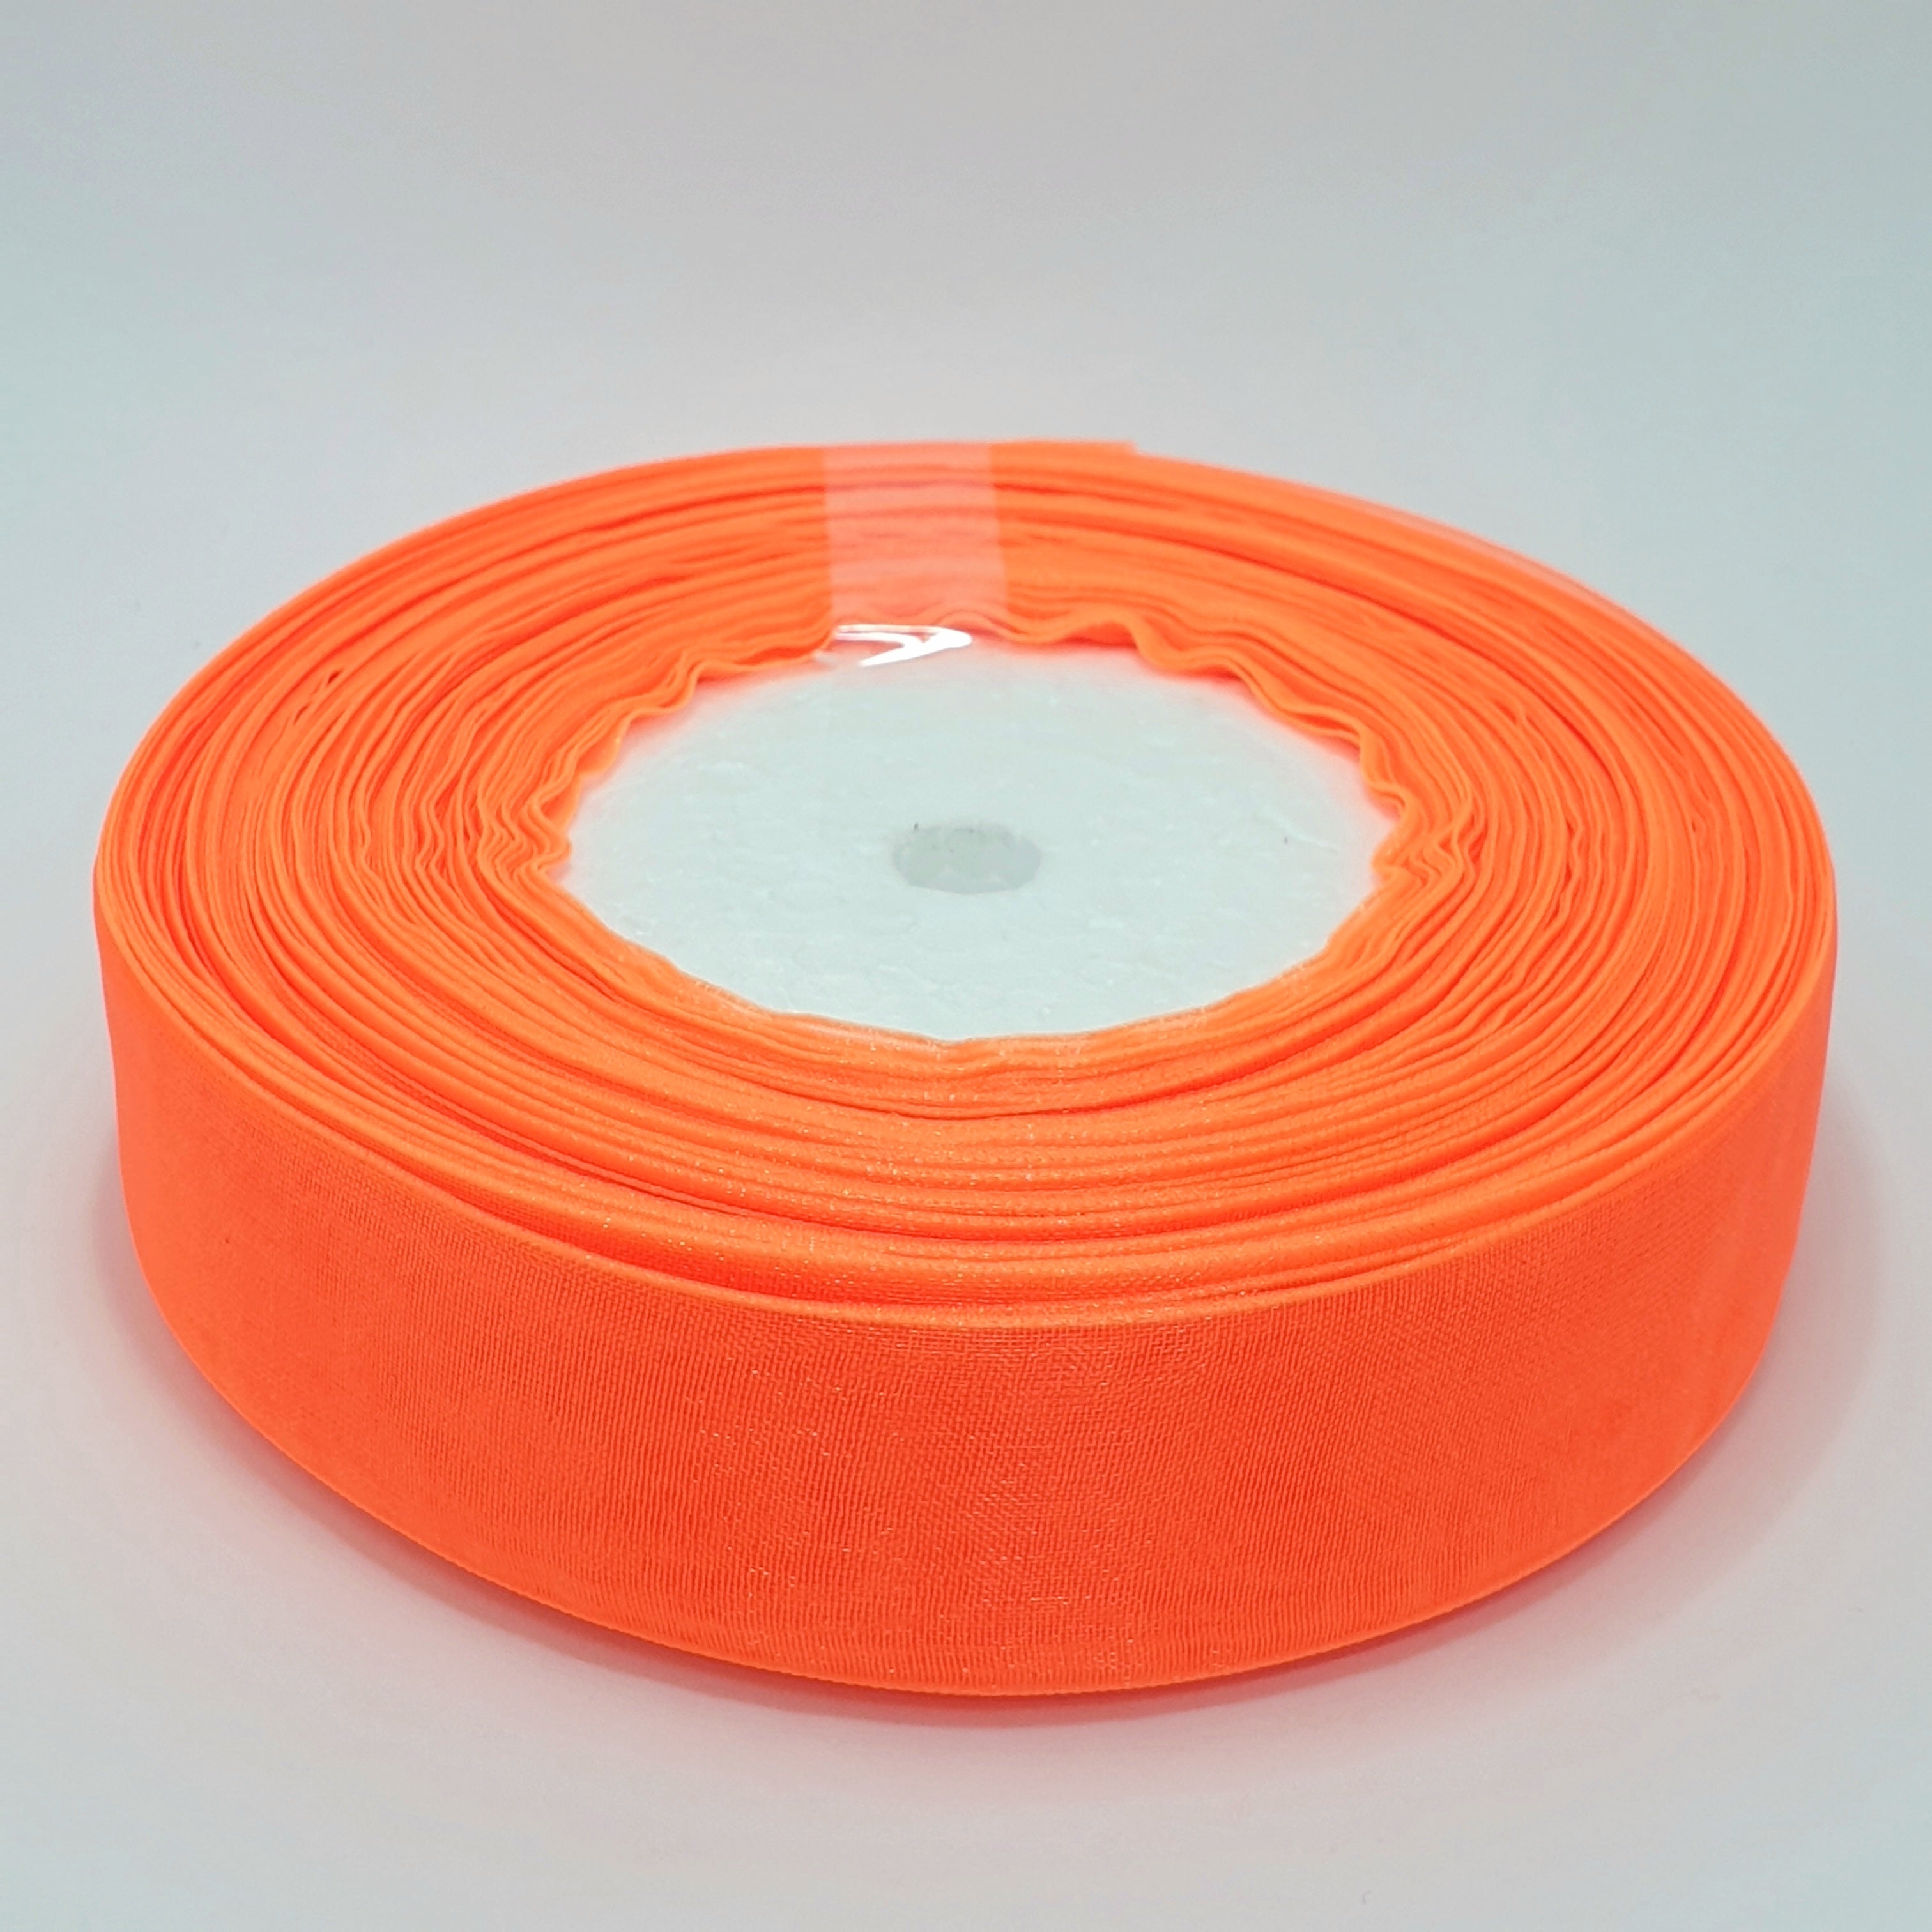 MajorCrafts 25mm 45metres Sheer Organza Fabric Ribbon Roll Bright Orange R1023